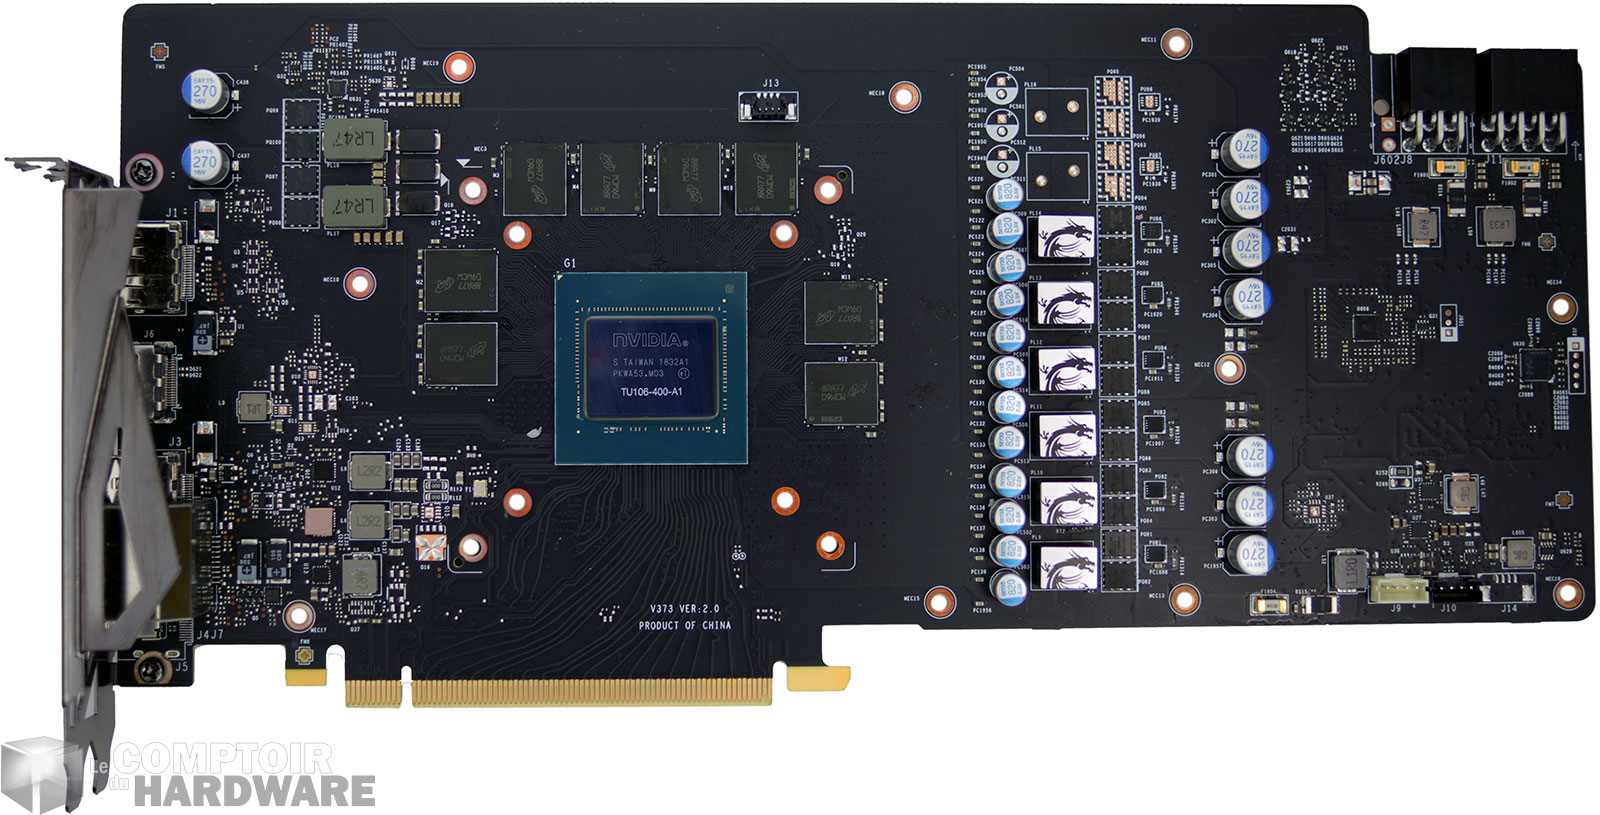 MSI RTX 2070 ARMOR : PCB